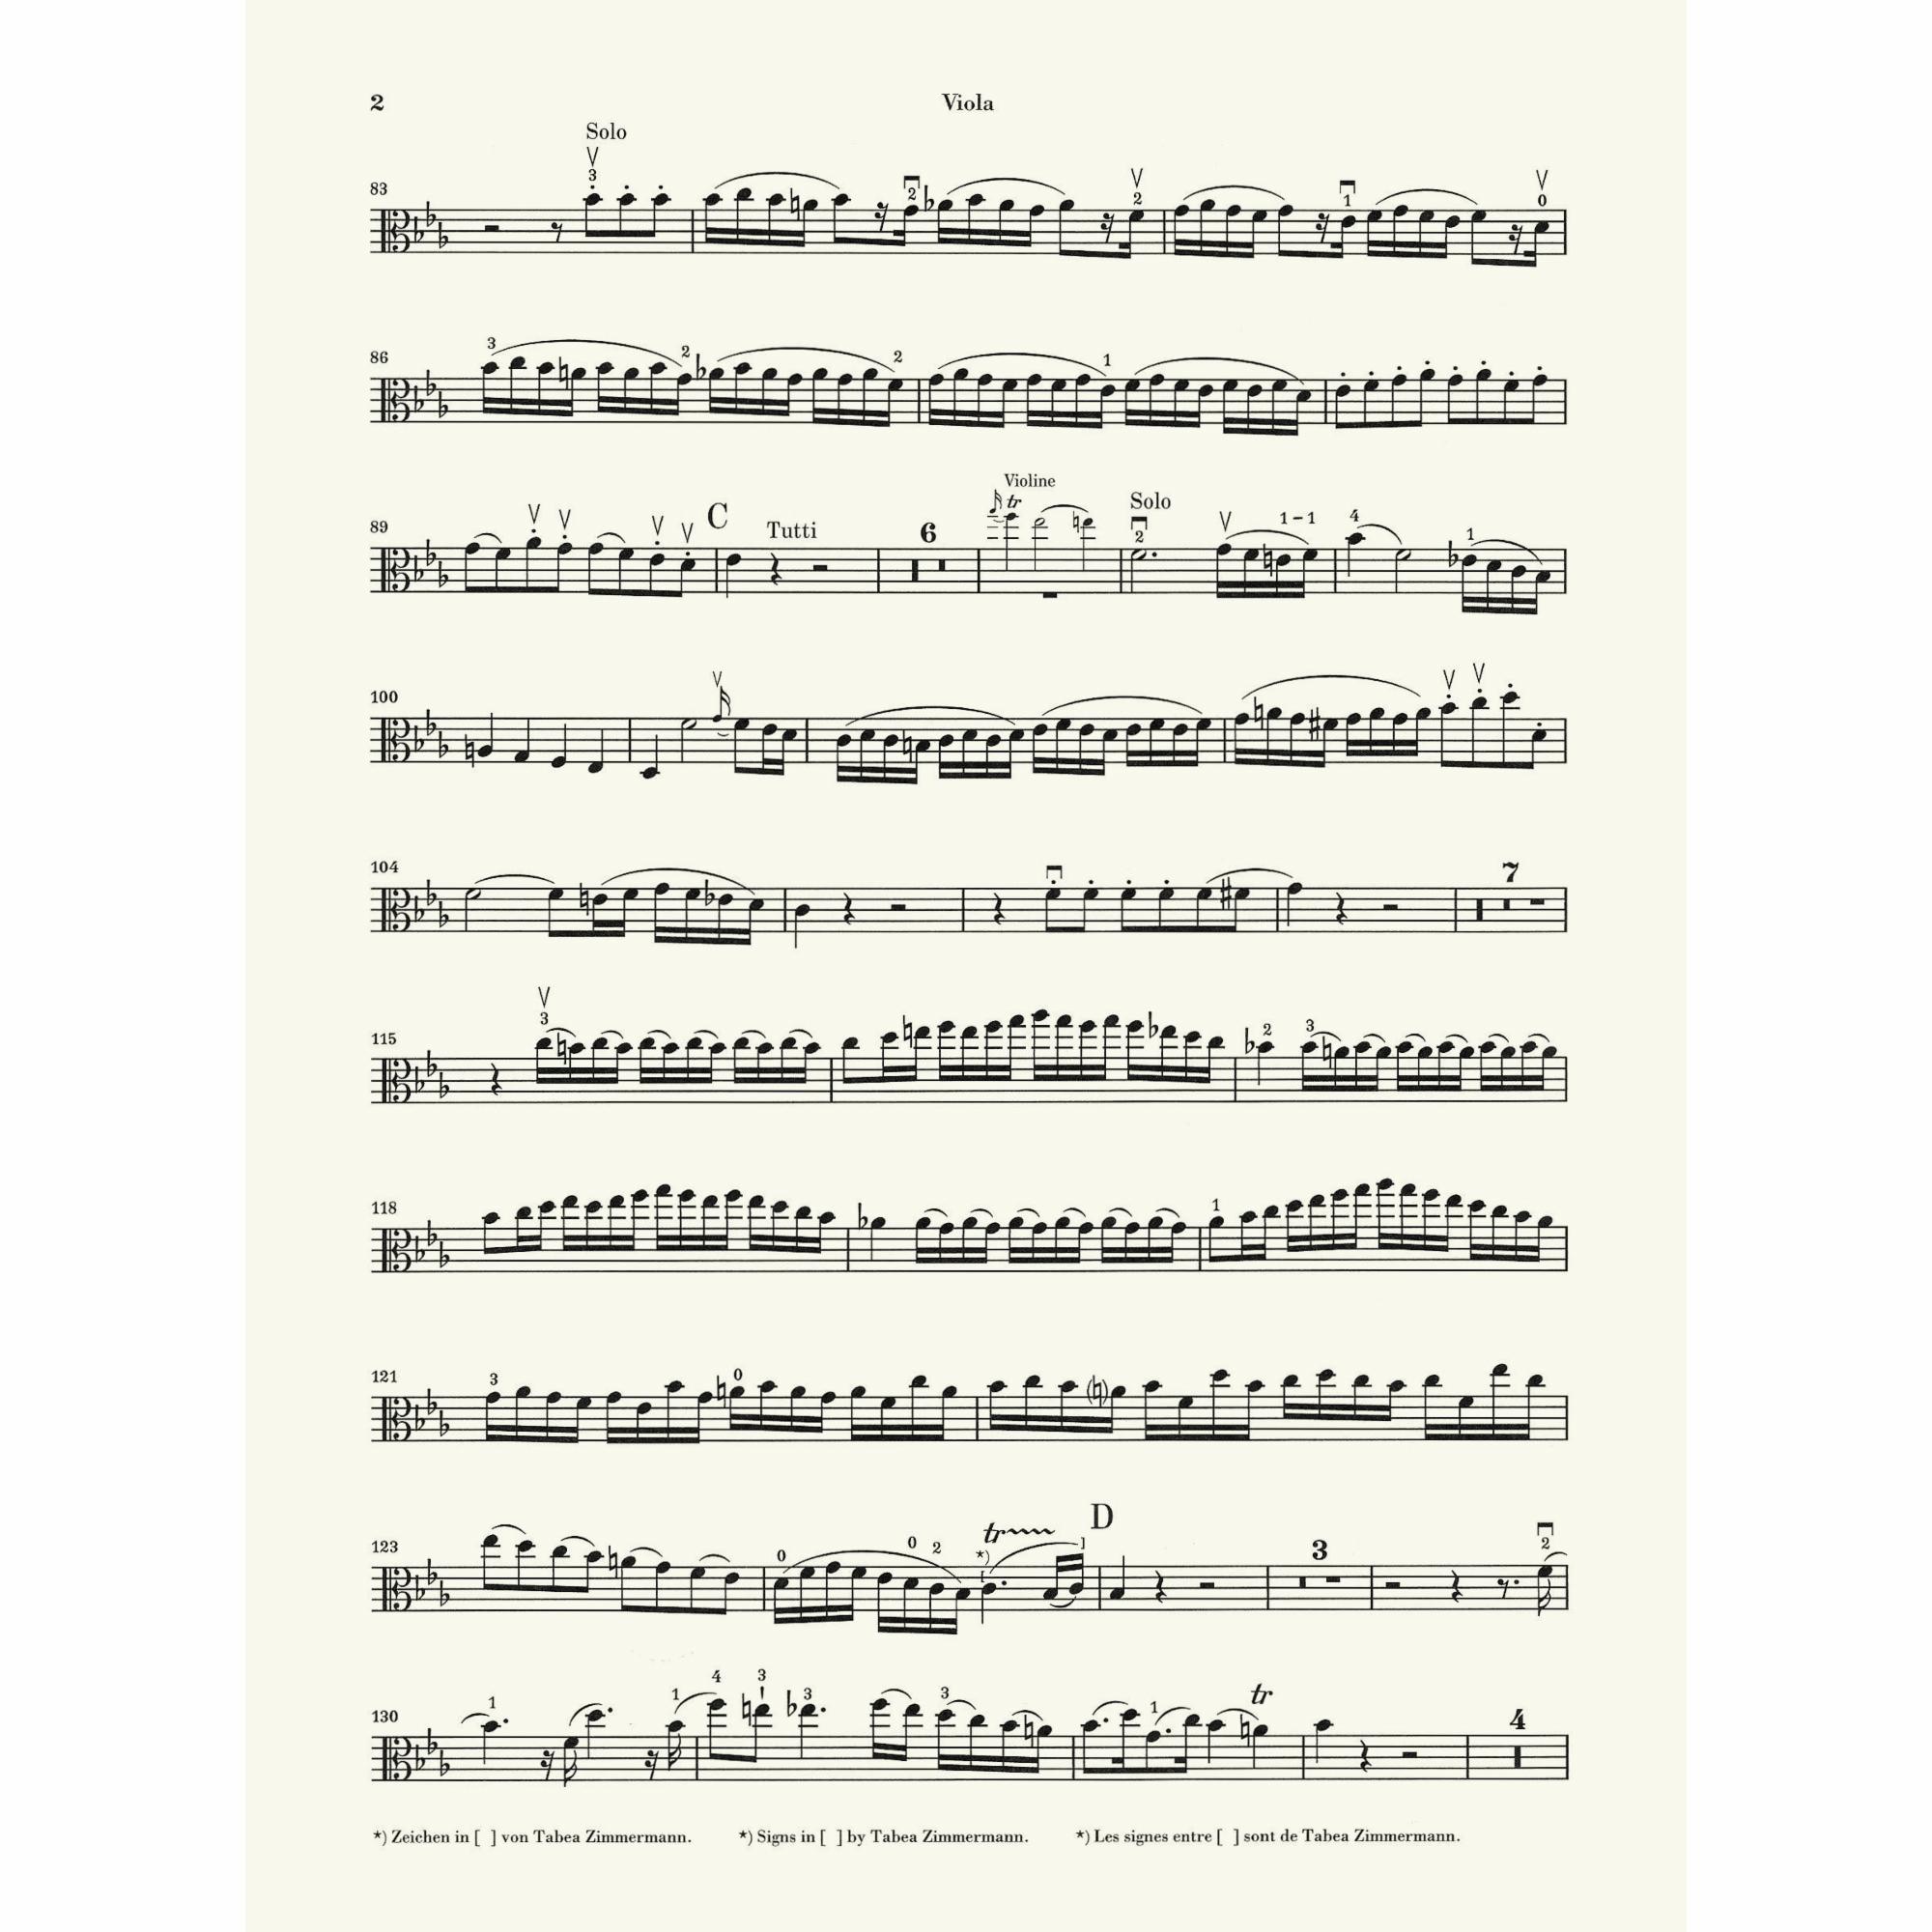 Sample: Marked Viola (Pg. 2)